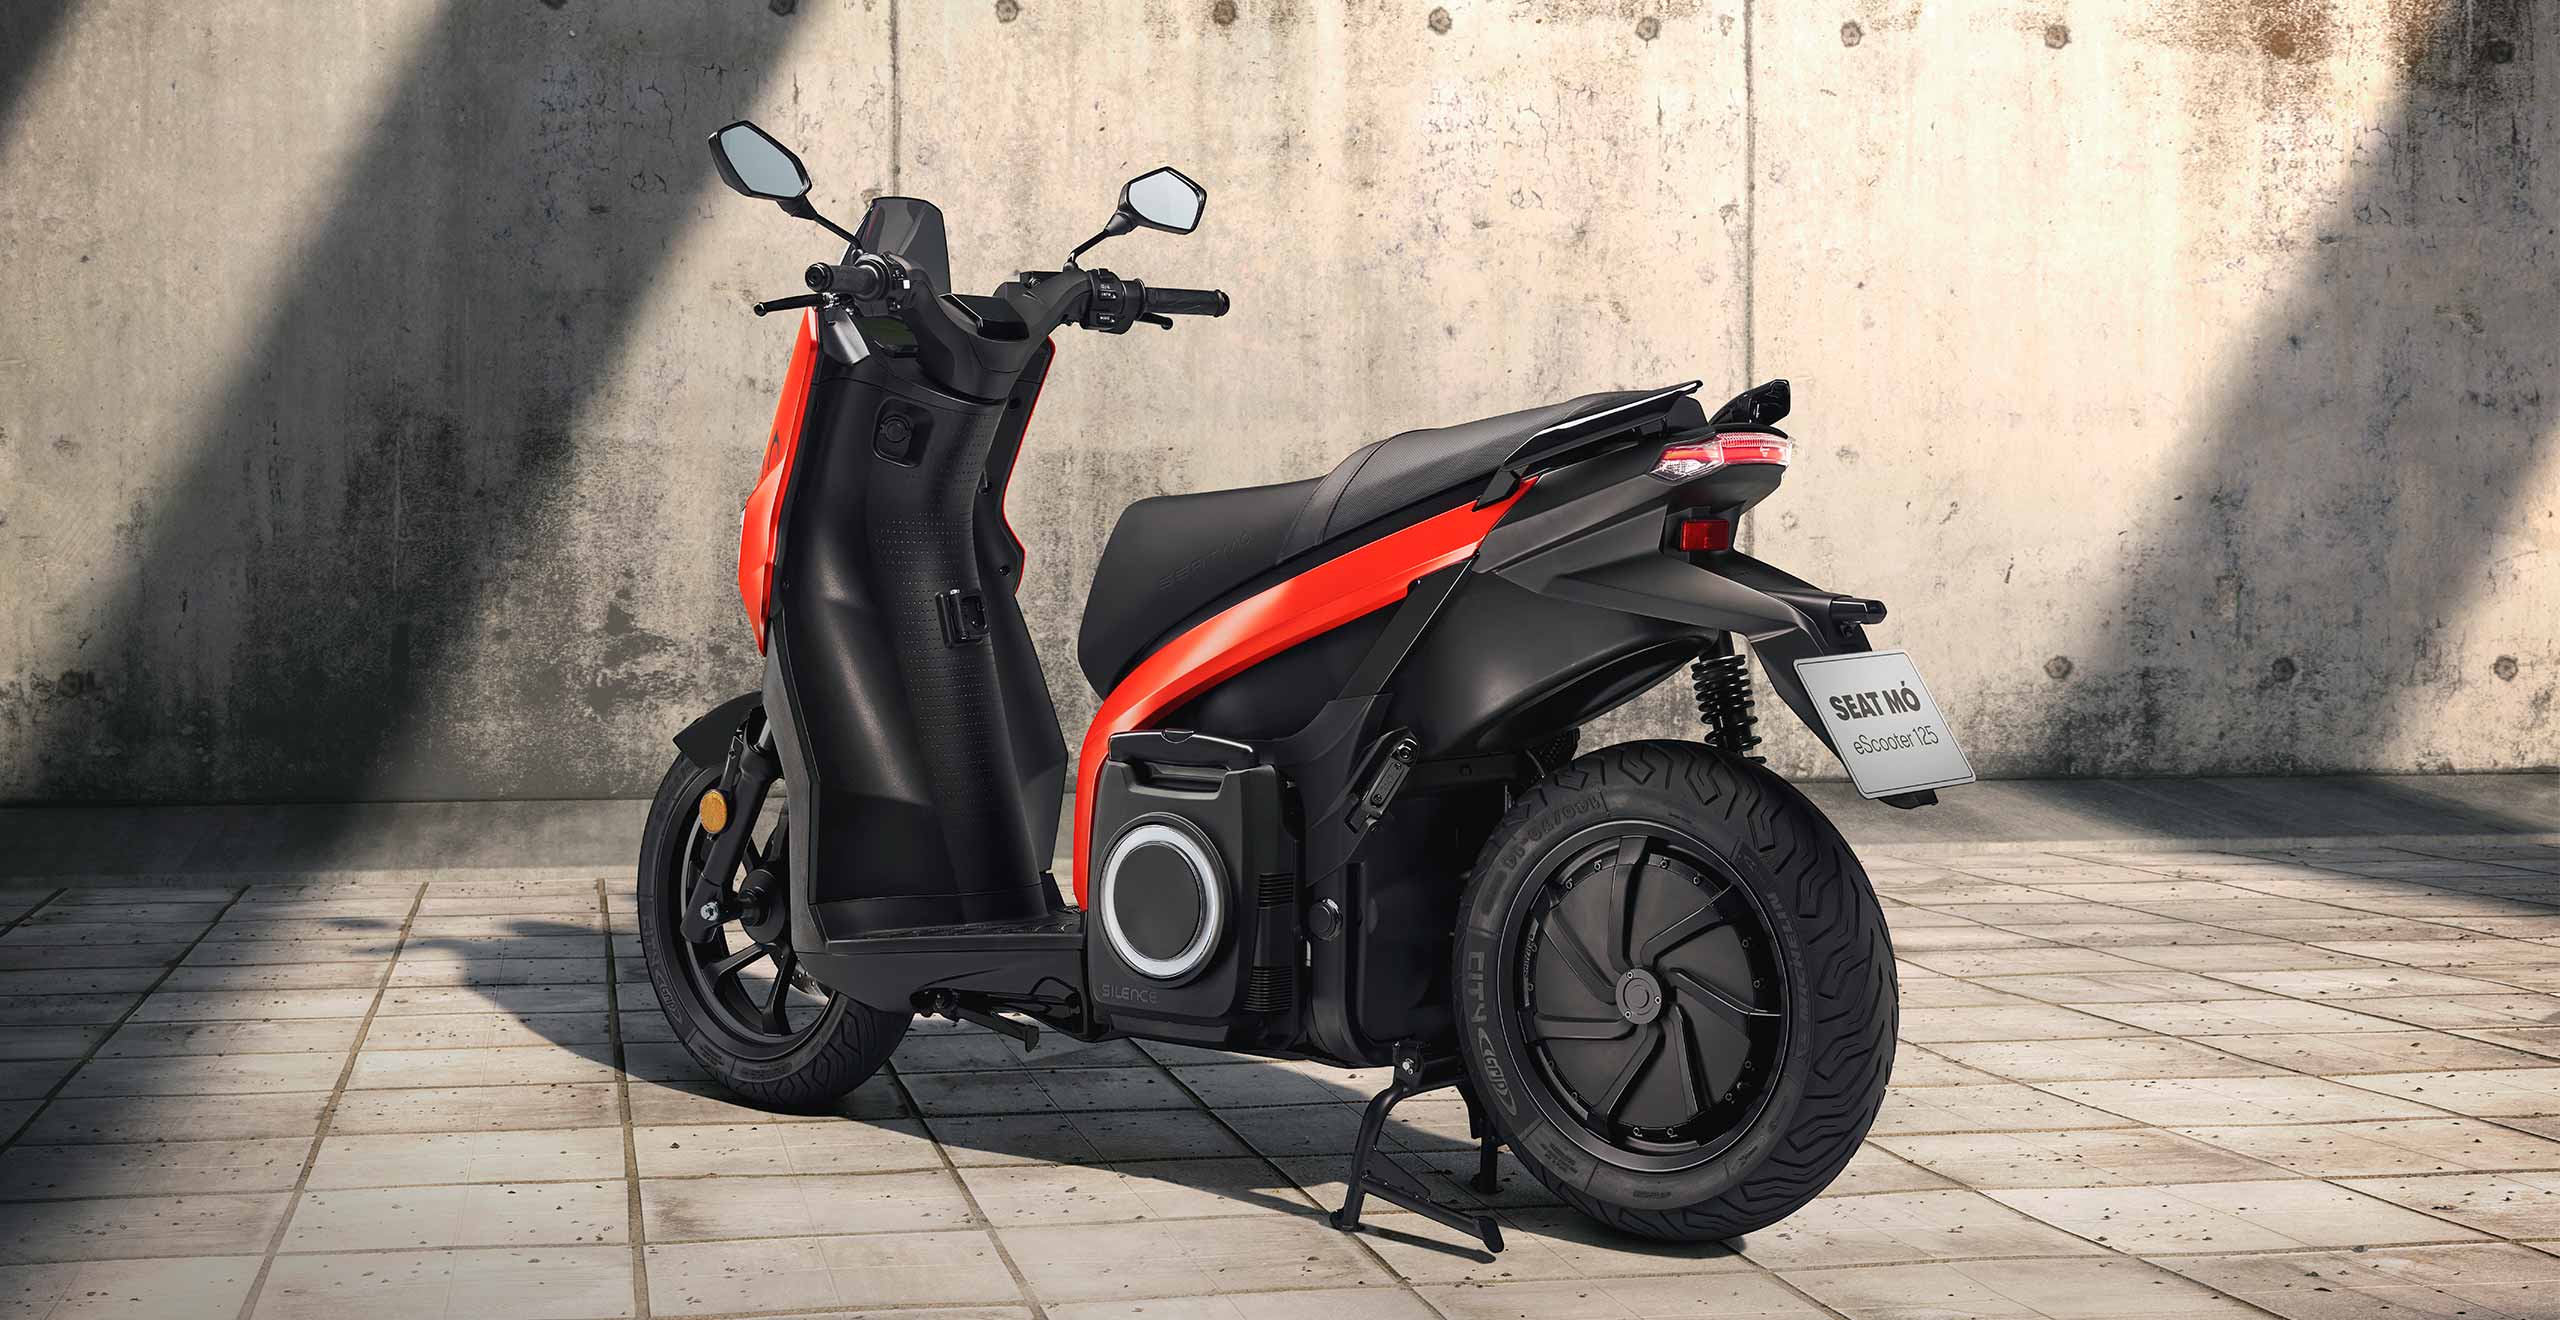 Motociclo elettrico SEAT MÓ eScooter 125, vista posteriore